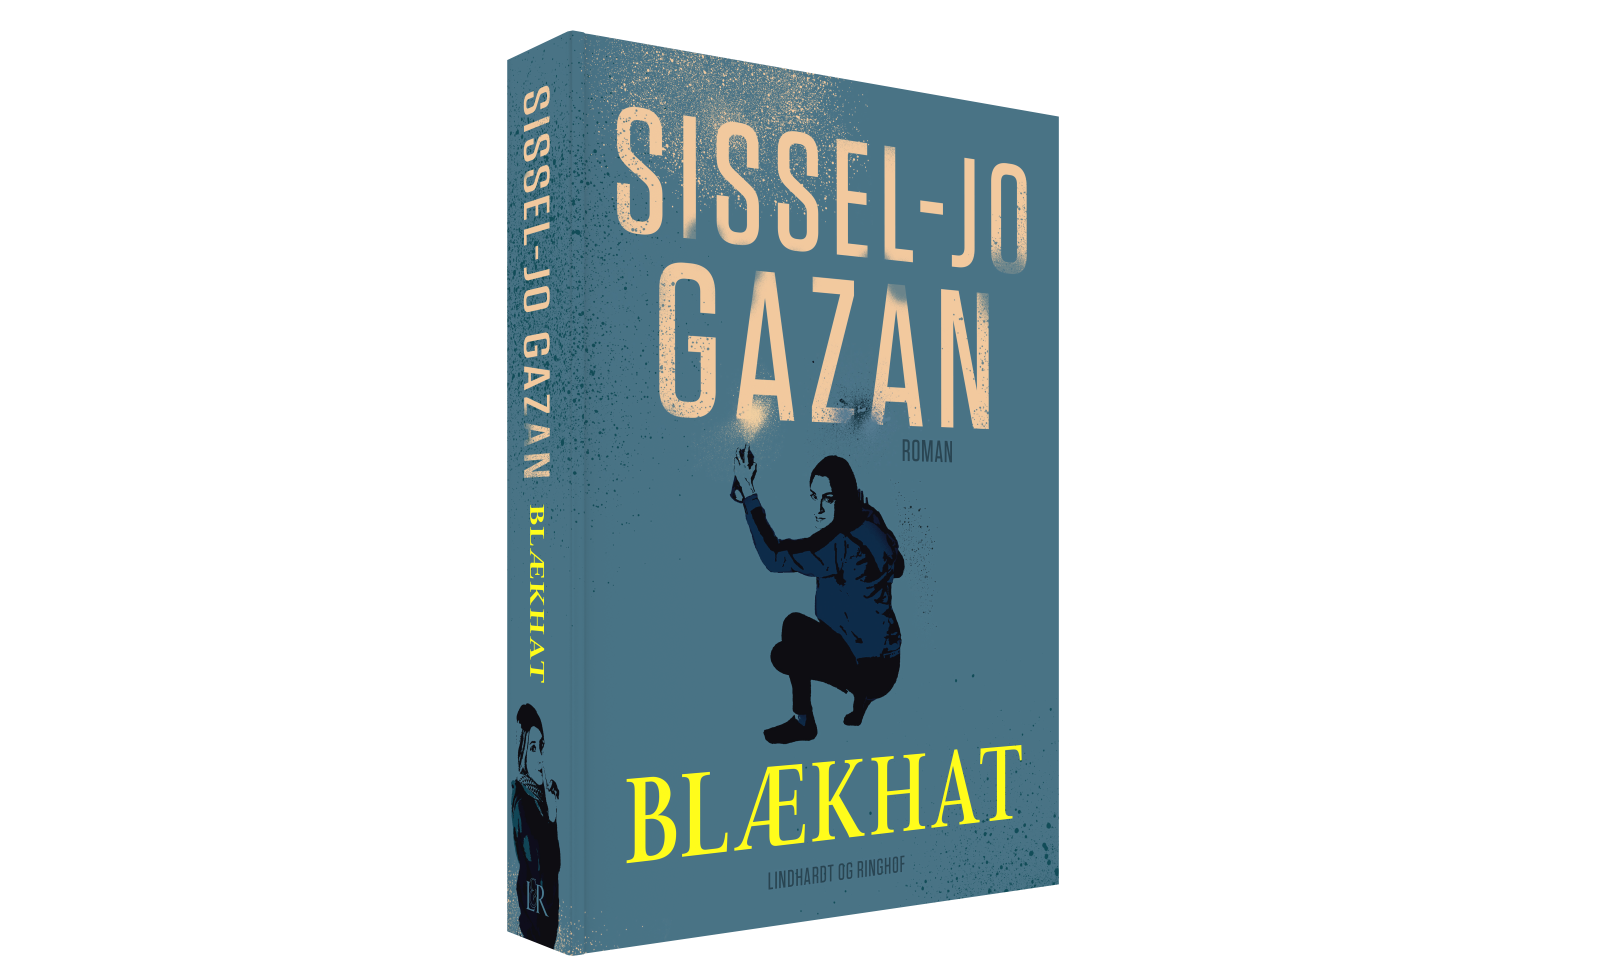 blækhat, Sissel-Jo Gazan, street art, spændingsroman, 